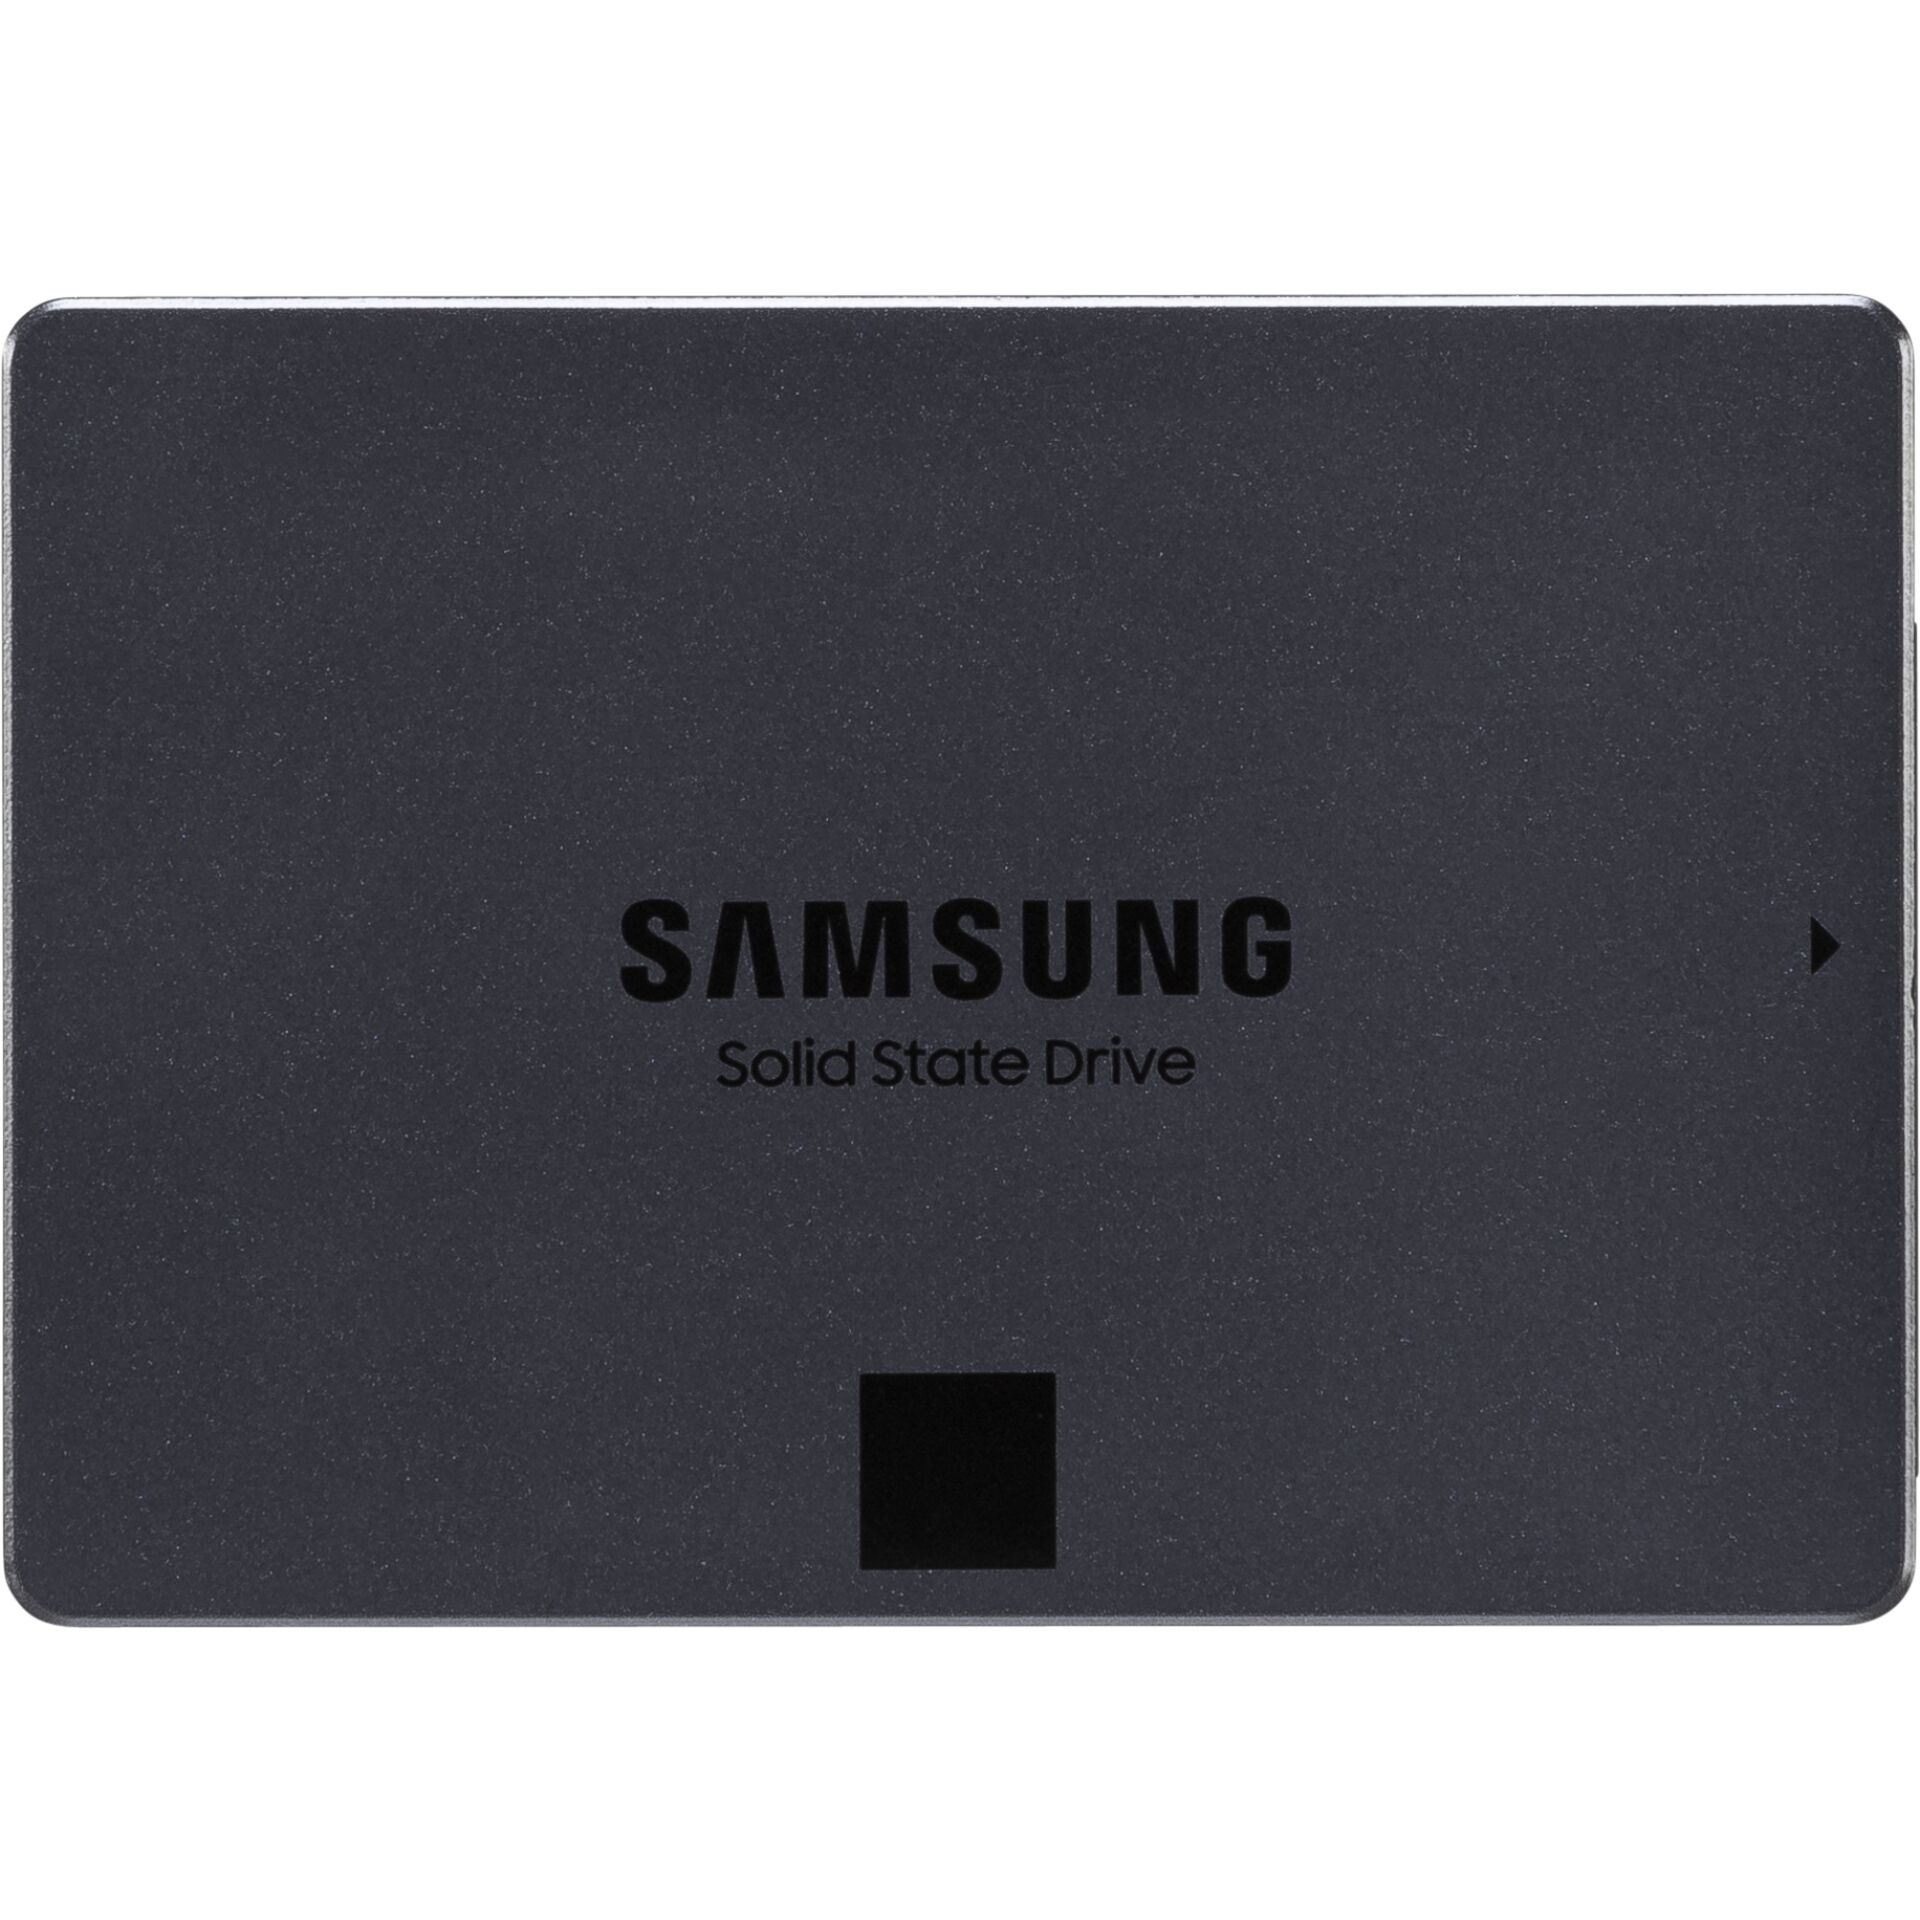 2.0 TB SSD Samsung 870 QVO, SATA 6Gb/s, lesen: 560MB/s, schreiben: 530MB/s SLC-Cached (160MB/s QLC), TBW: